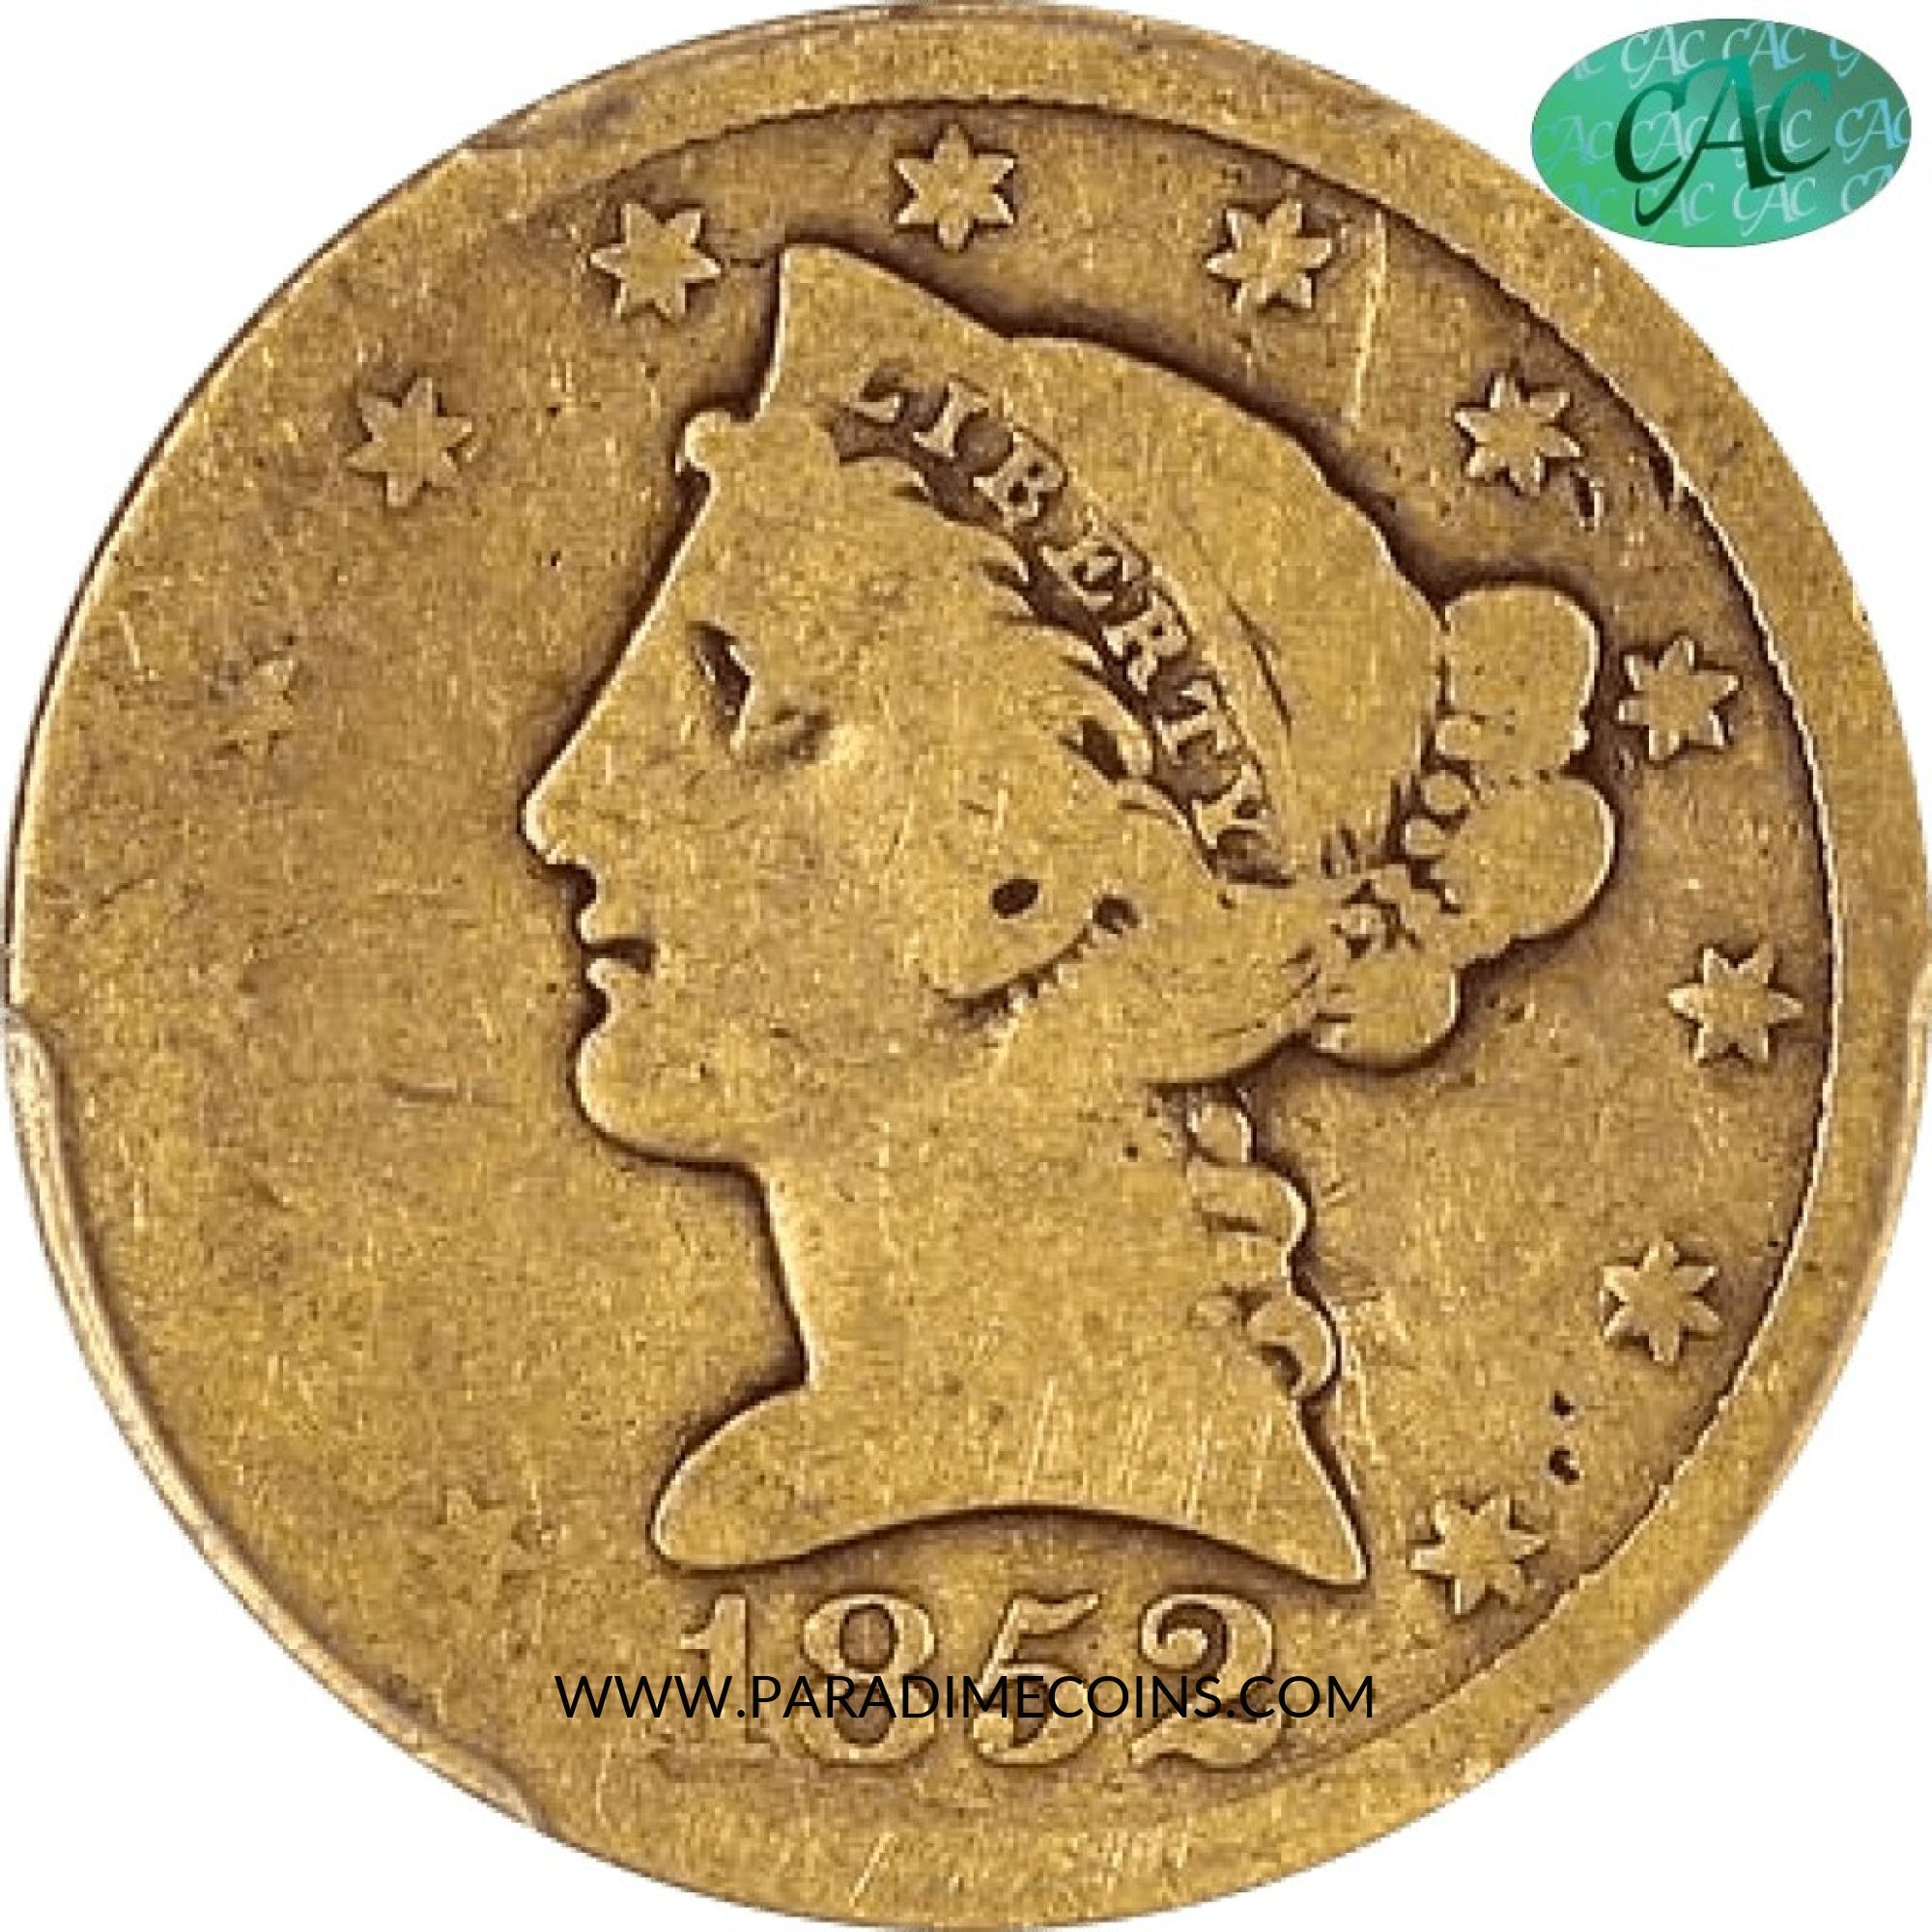 1852 $5 AG03 PCGS CAC - Paradime Coins | PCGS NGC CACG CAC Rare US Numismatic Coins For Sale